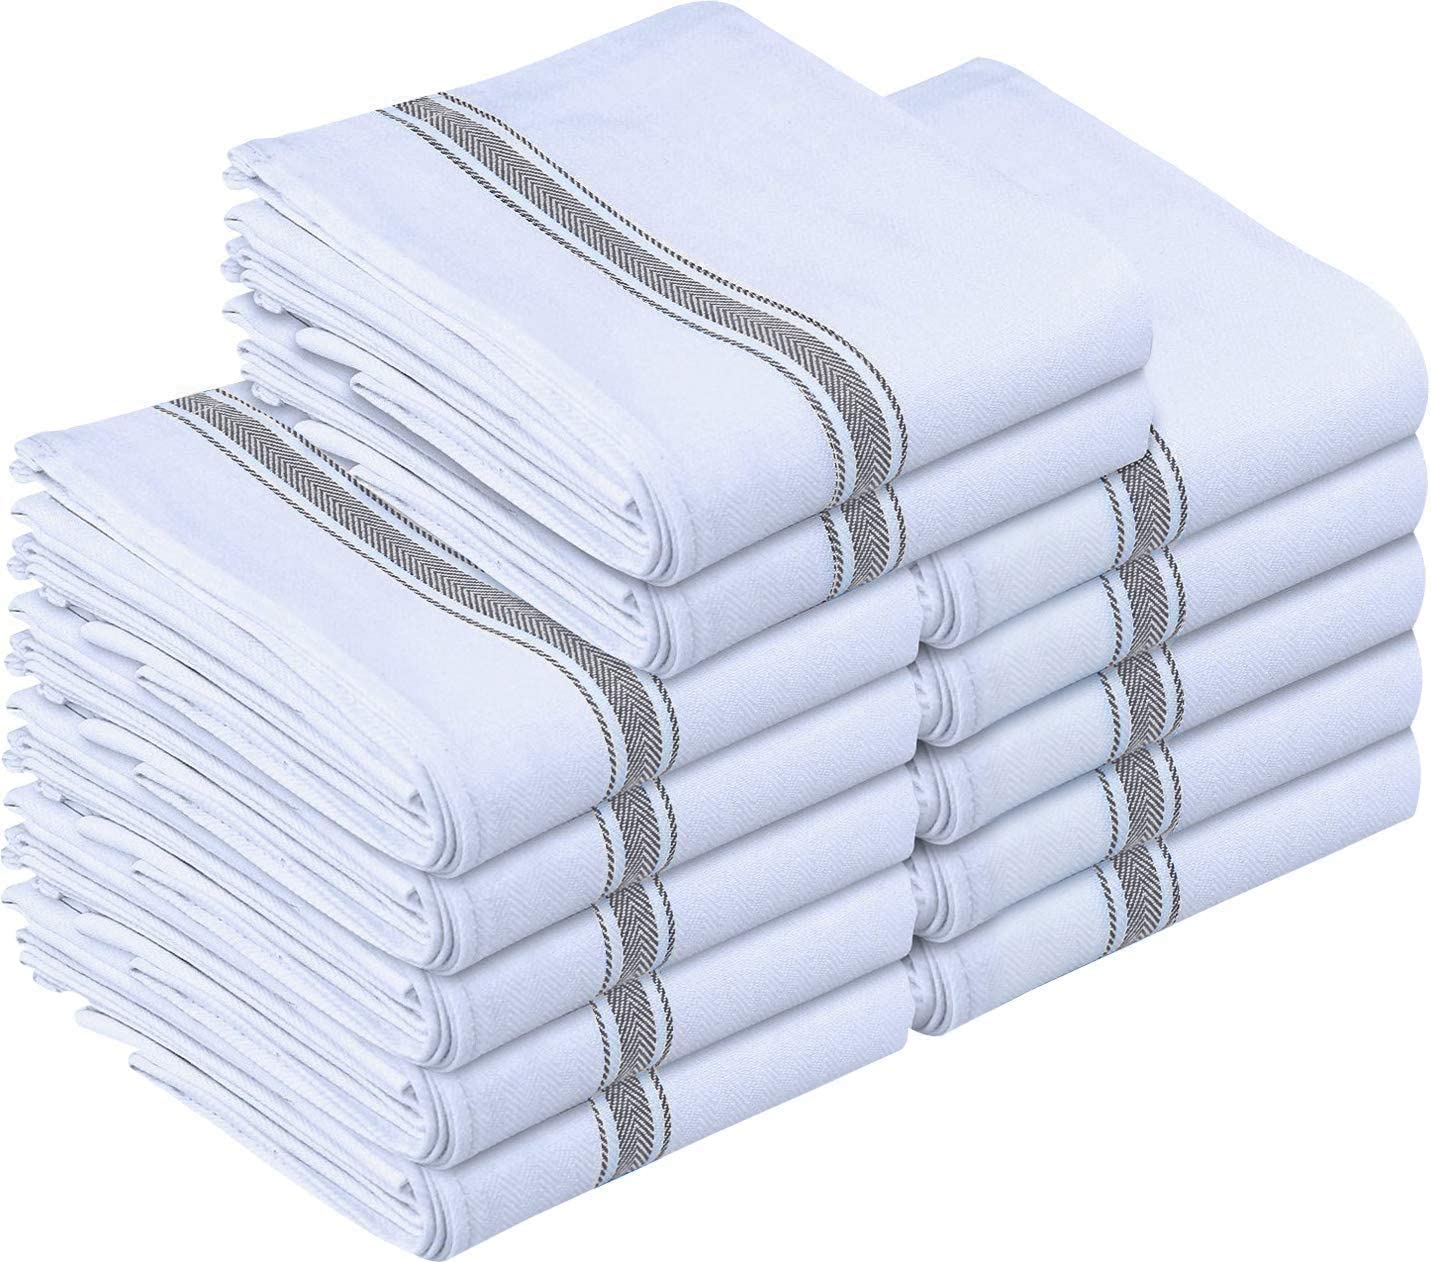 Kitchen Dish Towels, 16 Inch x 25 Inch Bulk Cotton Dishcloths Set, 12 Pack